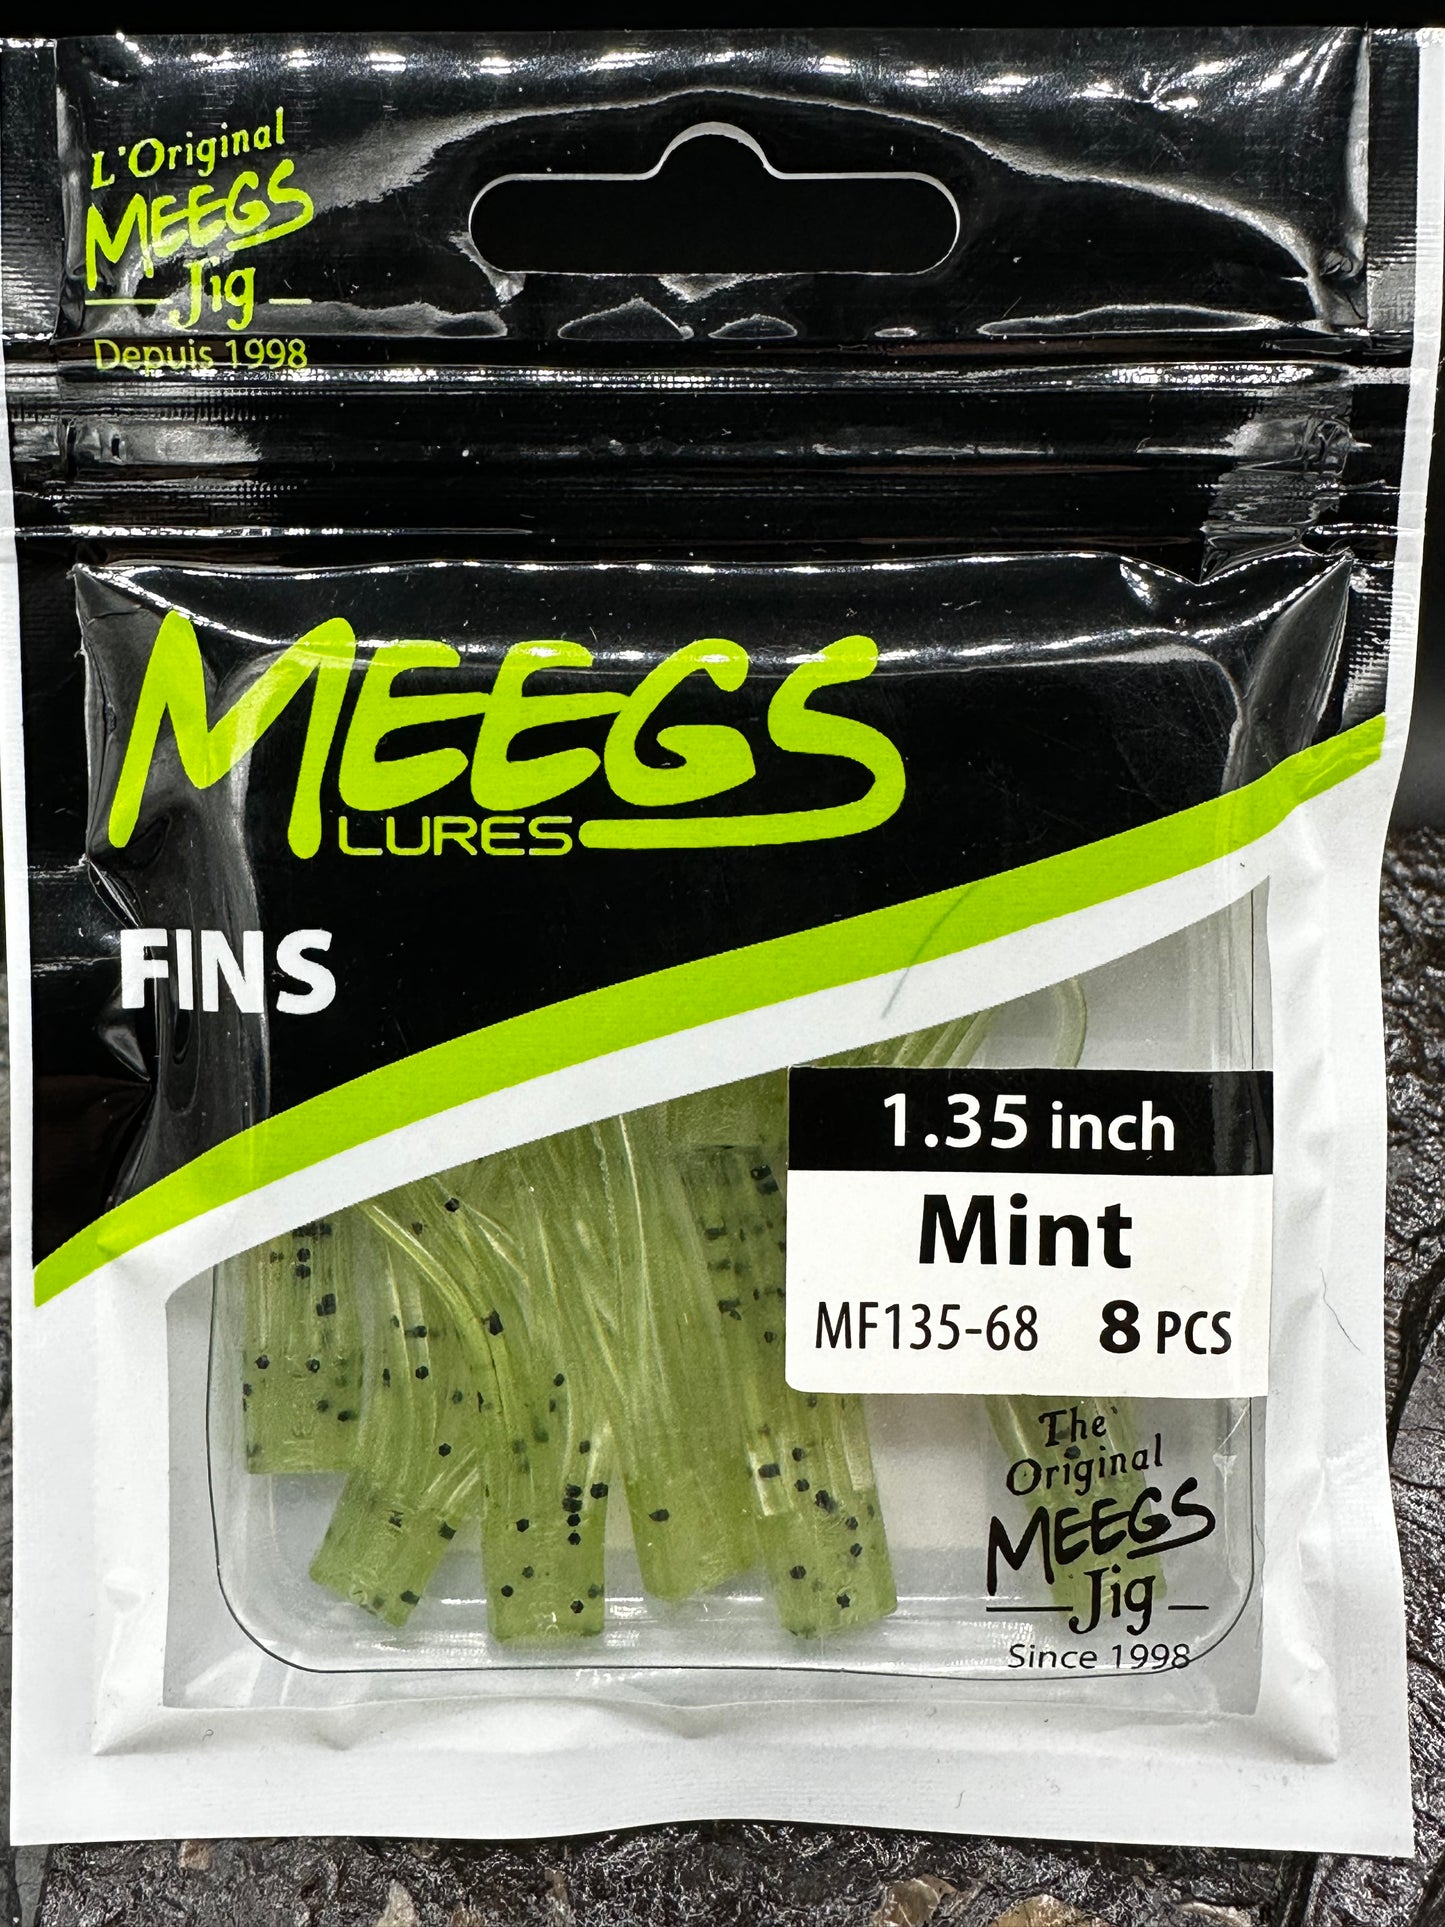 Meegs Fins